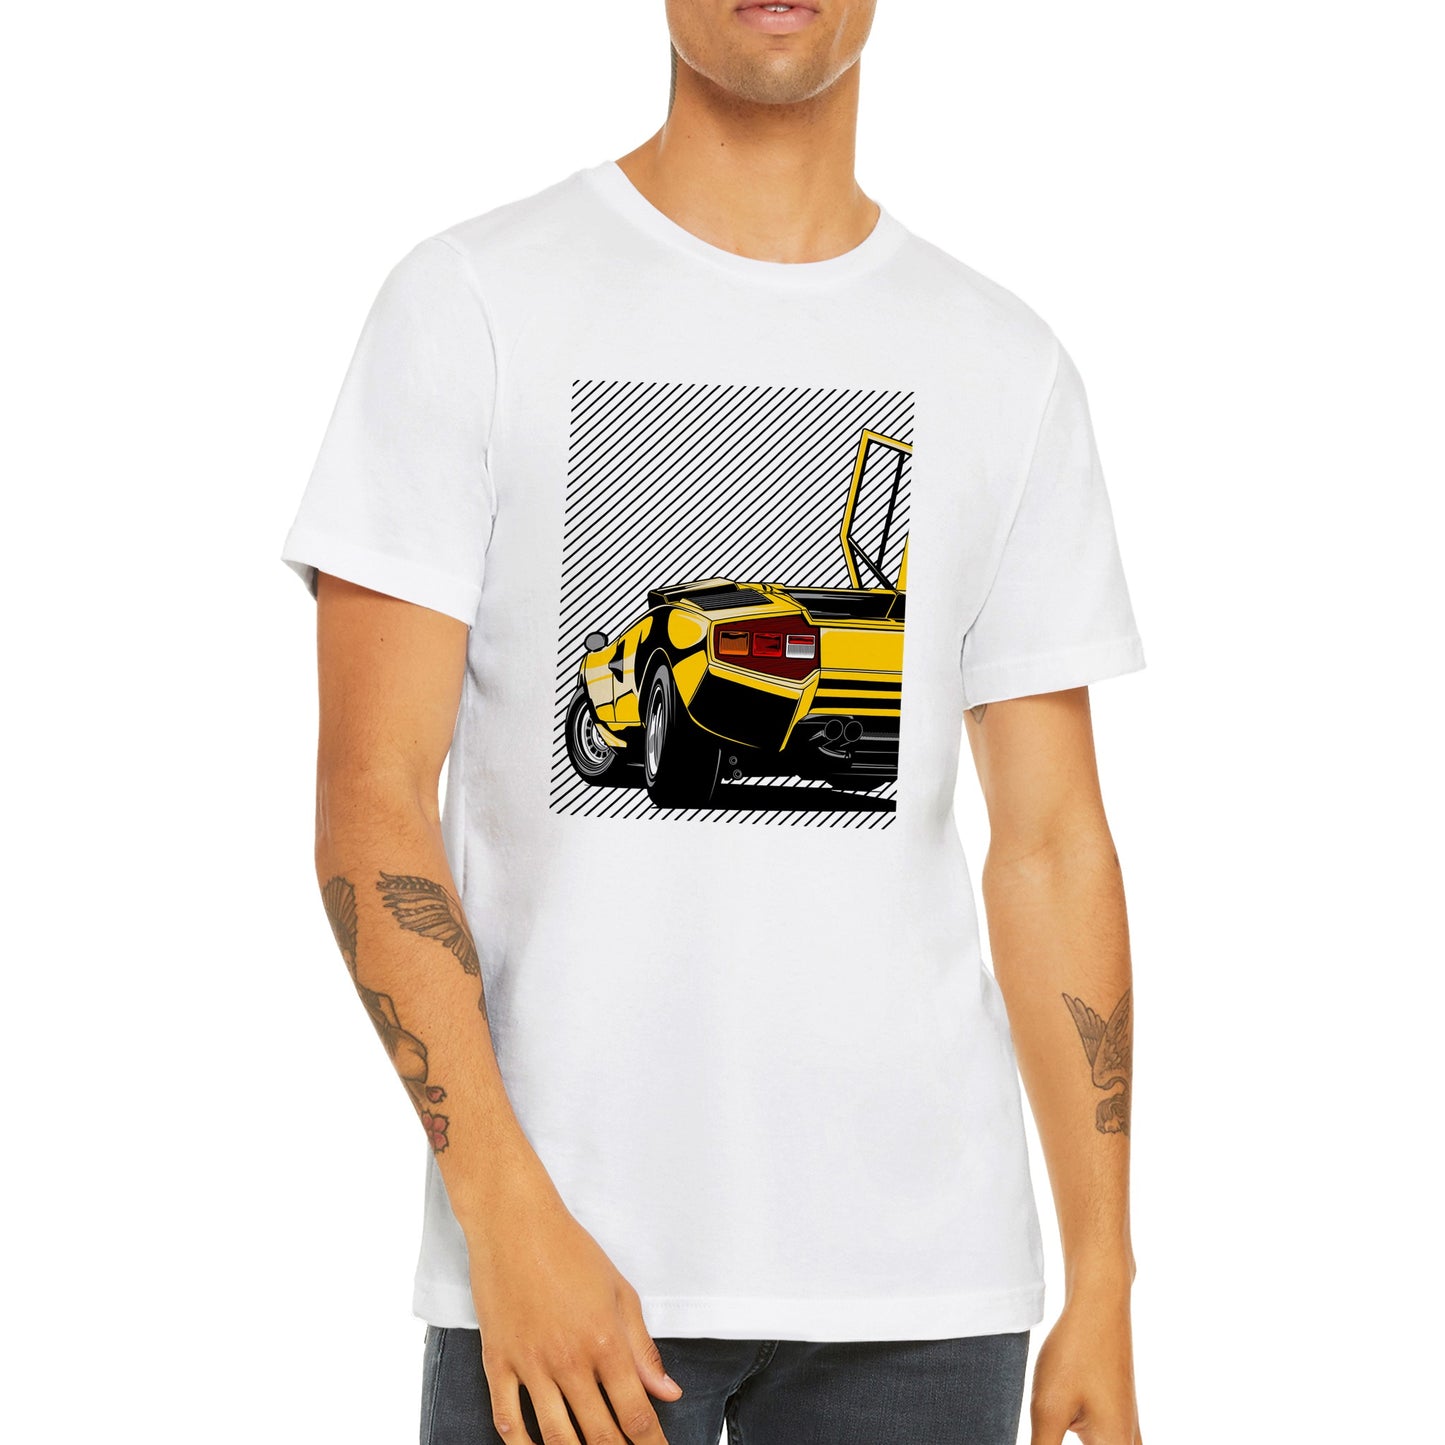 Car T-shirt - Lambo - countach Artwork - Premium Unisex T-shirt 